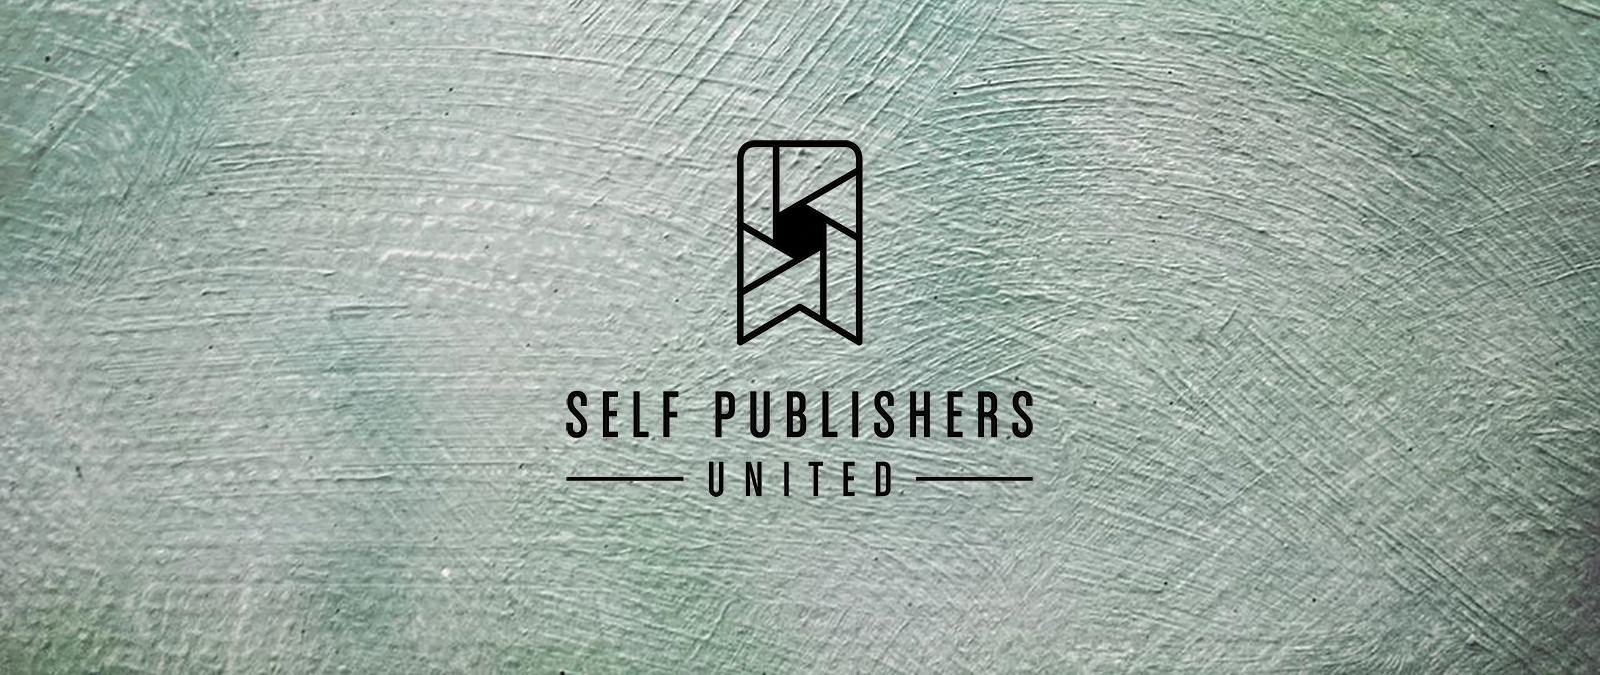 Sponsoring Self Publishers United